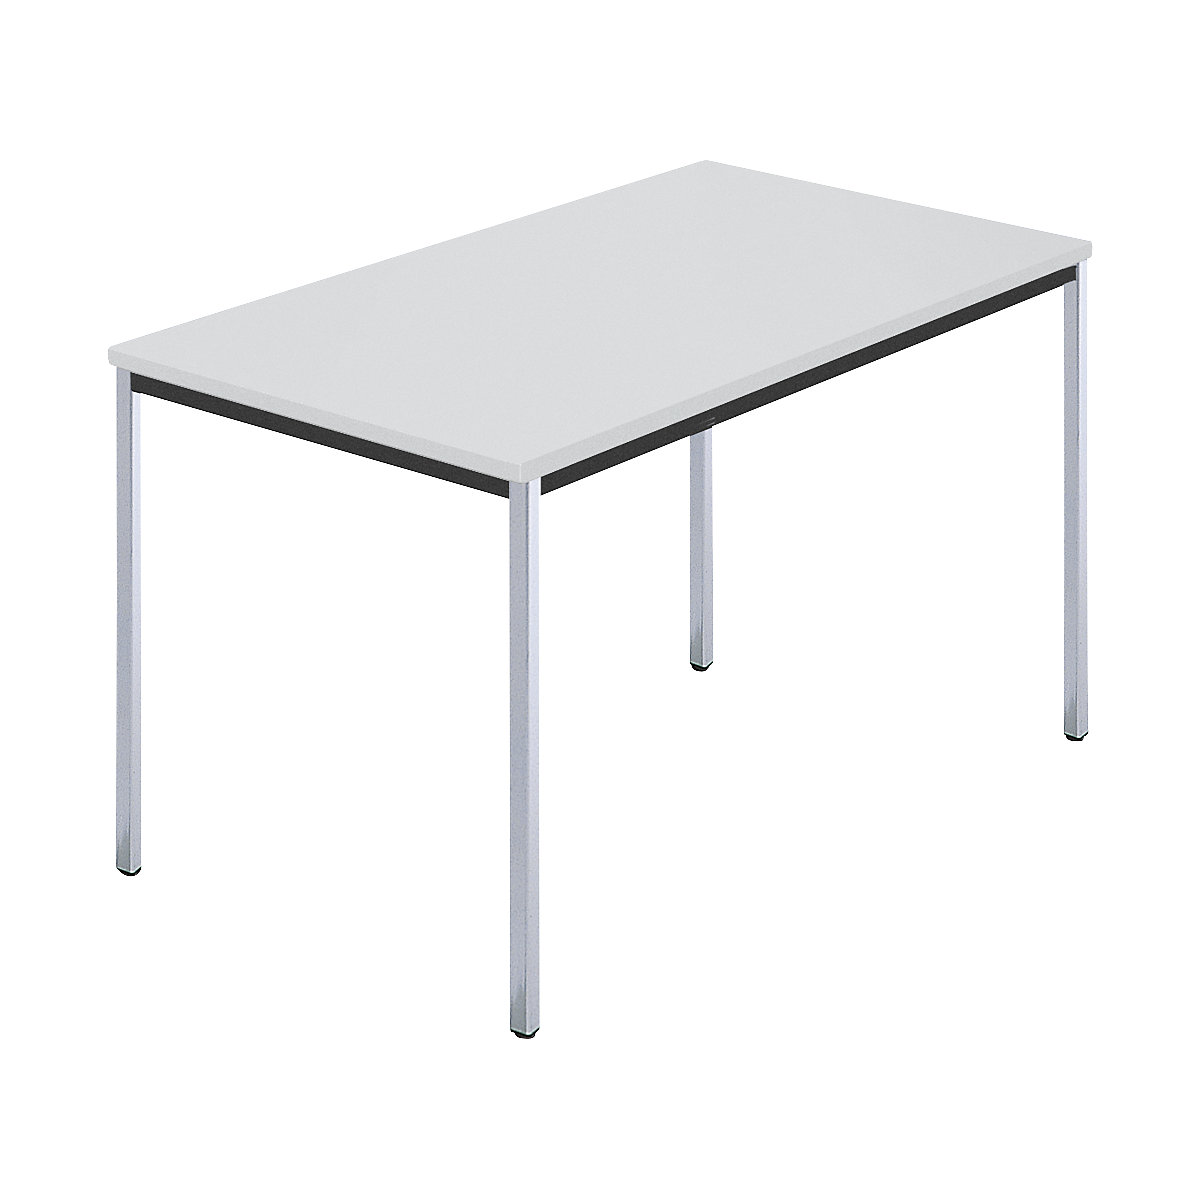 Obdélníkový stůl, čtyřhranná trubka pochromovaná, š x h 1200 x 800 mm, šedá-6